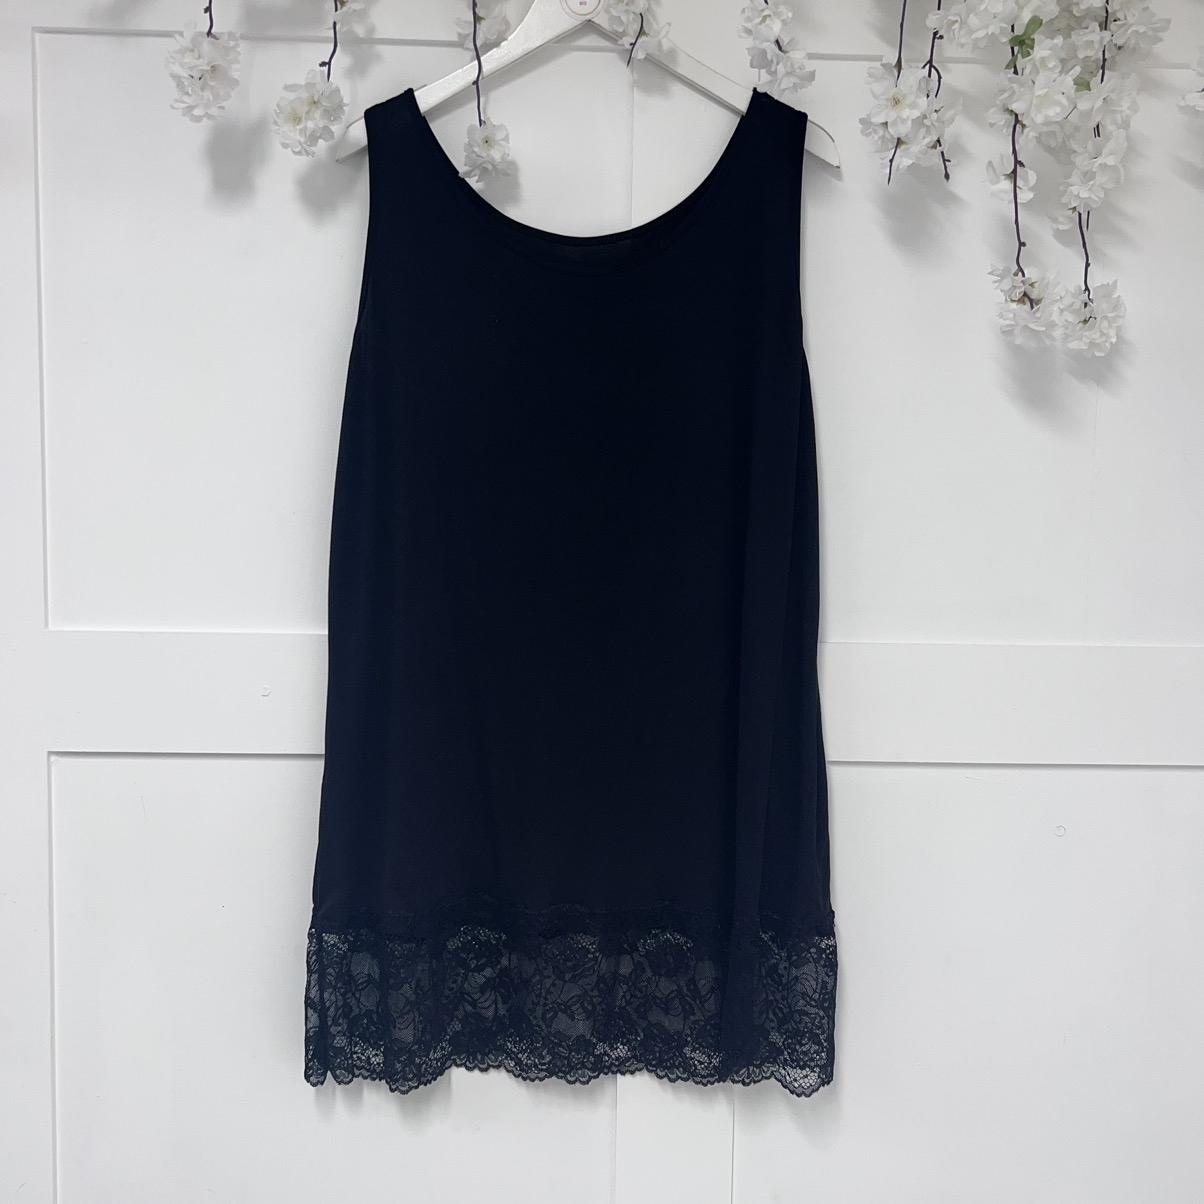 Violeta: Black long plus size layering vest. One size: 18-24/26